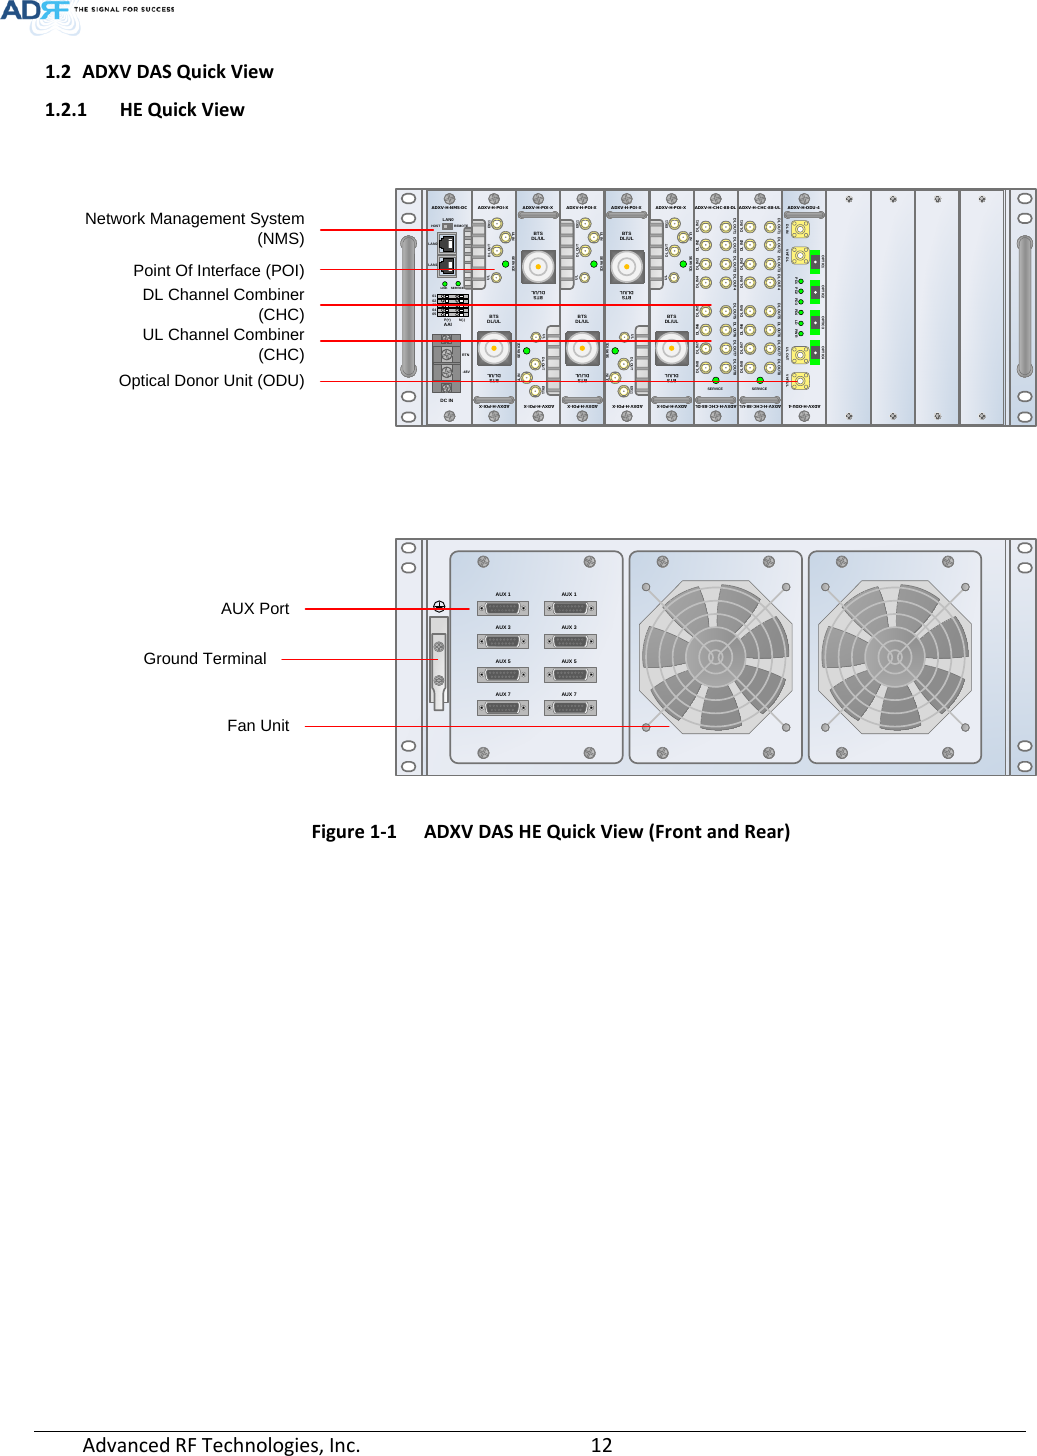 Page 12 of ADRF KOREA ADXV DAS(Distributed Antenna System) User Manual ADXV DAS